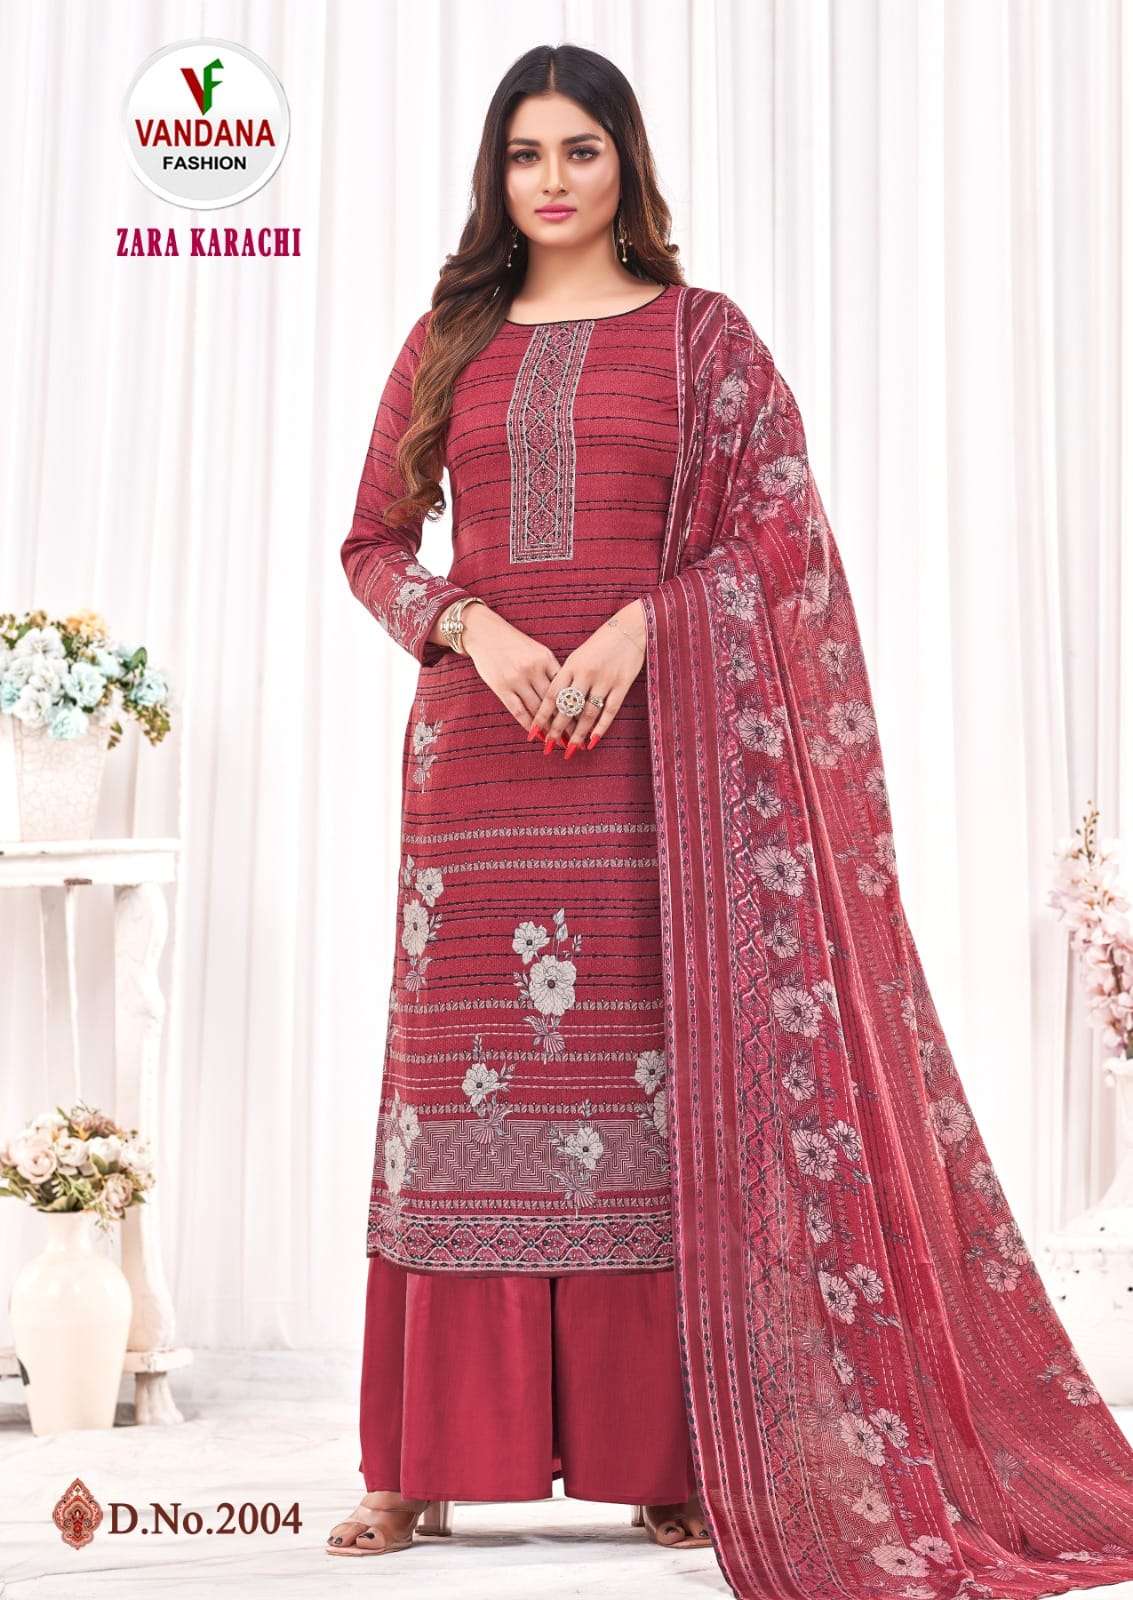 Zara Karachi Vol-2 By Vandana 2001 To 2010 Series Beautiful Festive Suits Colorful Stylish Fancy Casual Wear & Ethnic Wear Pure Cotton Digital Print Dresses At Wholesale Price